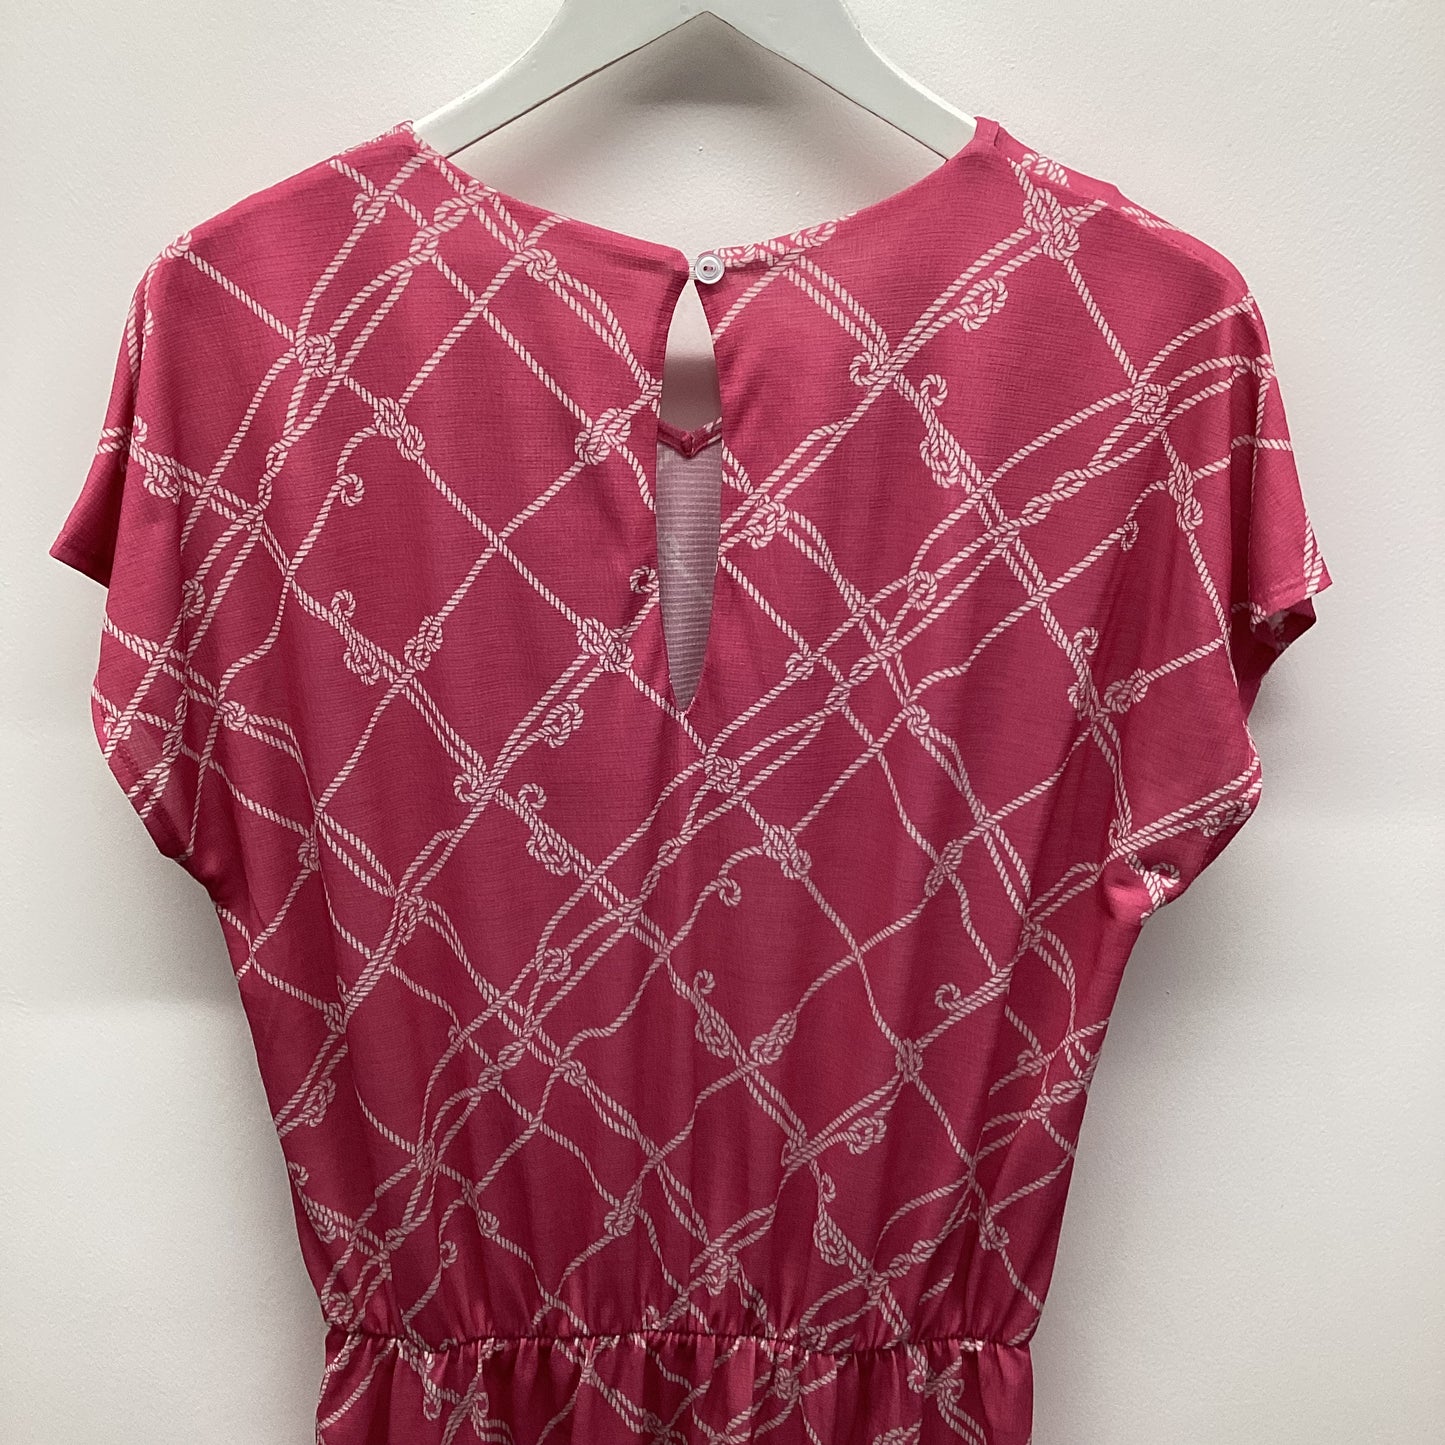 Nougat London Pink Pattern Dress (Very Good) (Size S)